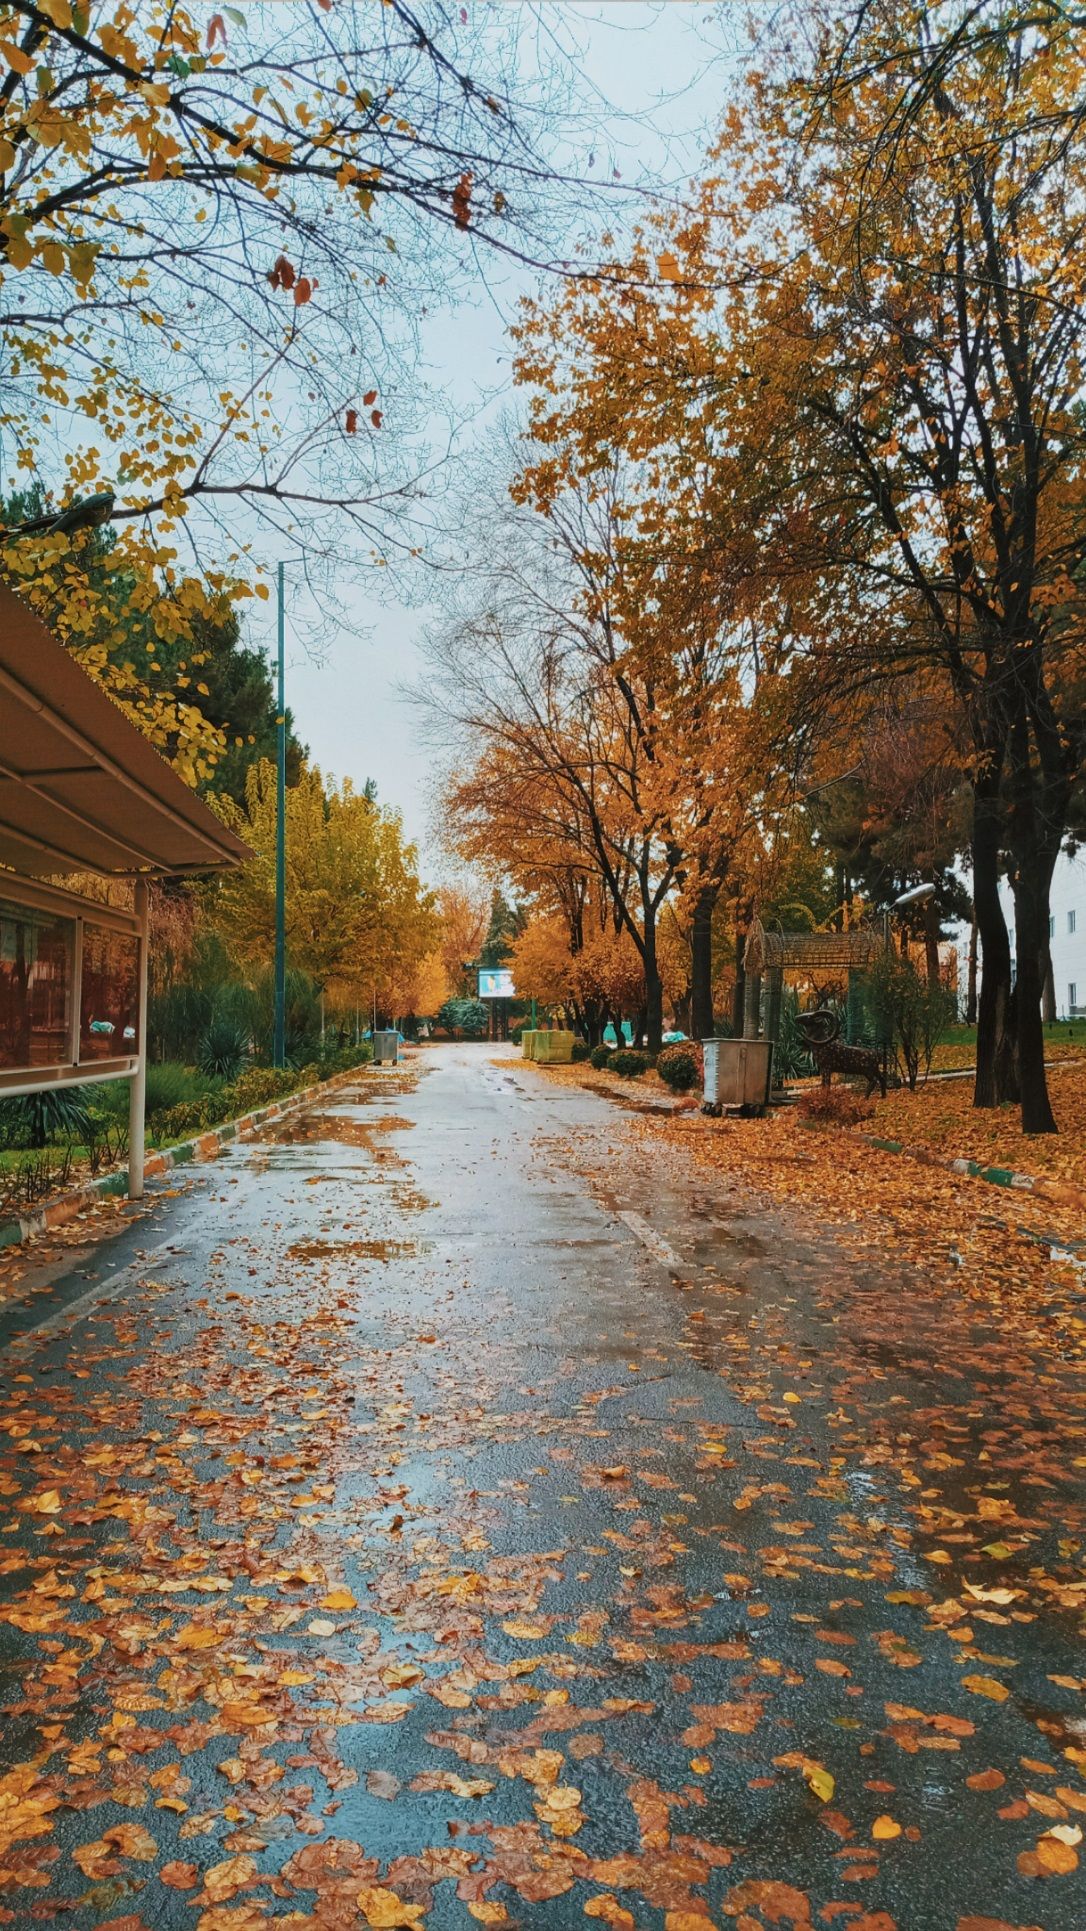 Tehran-University-university-of-tehran-TUMS-UT-Tehran-university-of-medical-sciences-علوم-پزشکی-دانشگاه-علوم-پزشکی-تهران-پزشکی-تهران-3.jpg-3.jpg